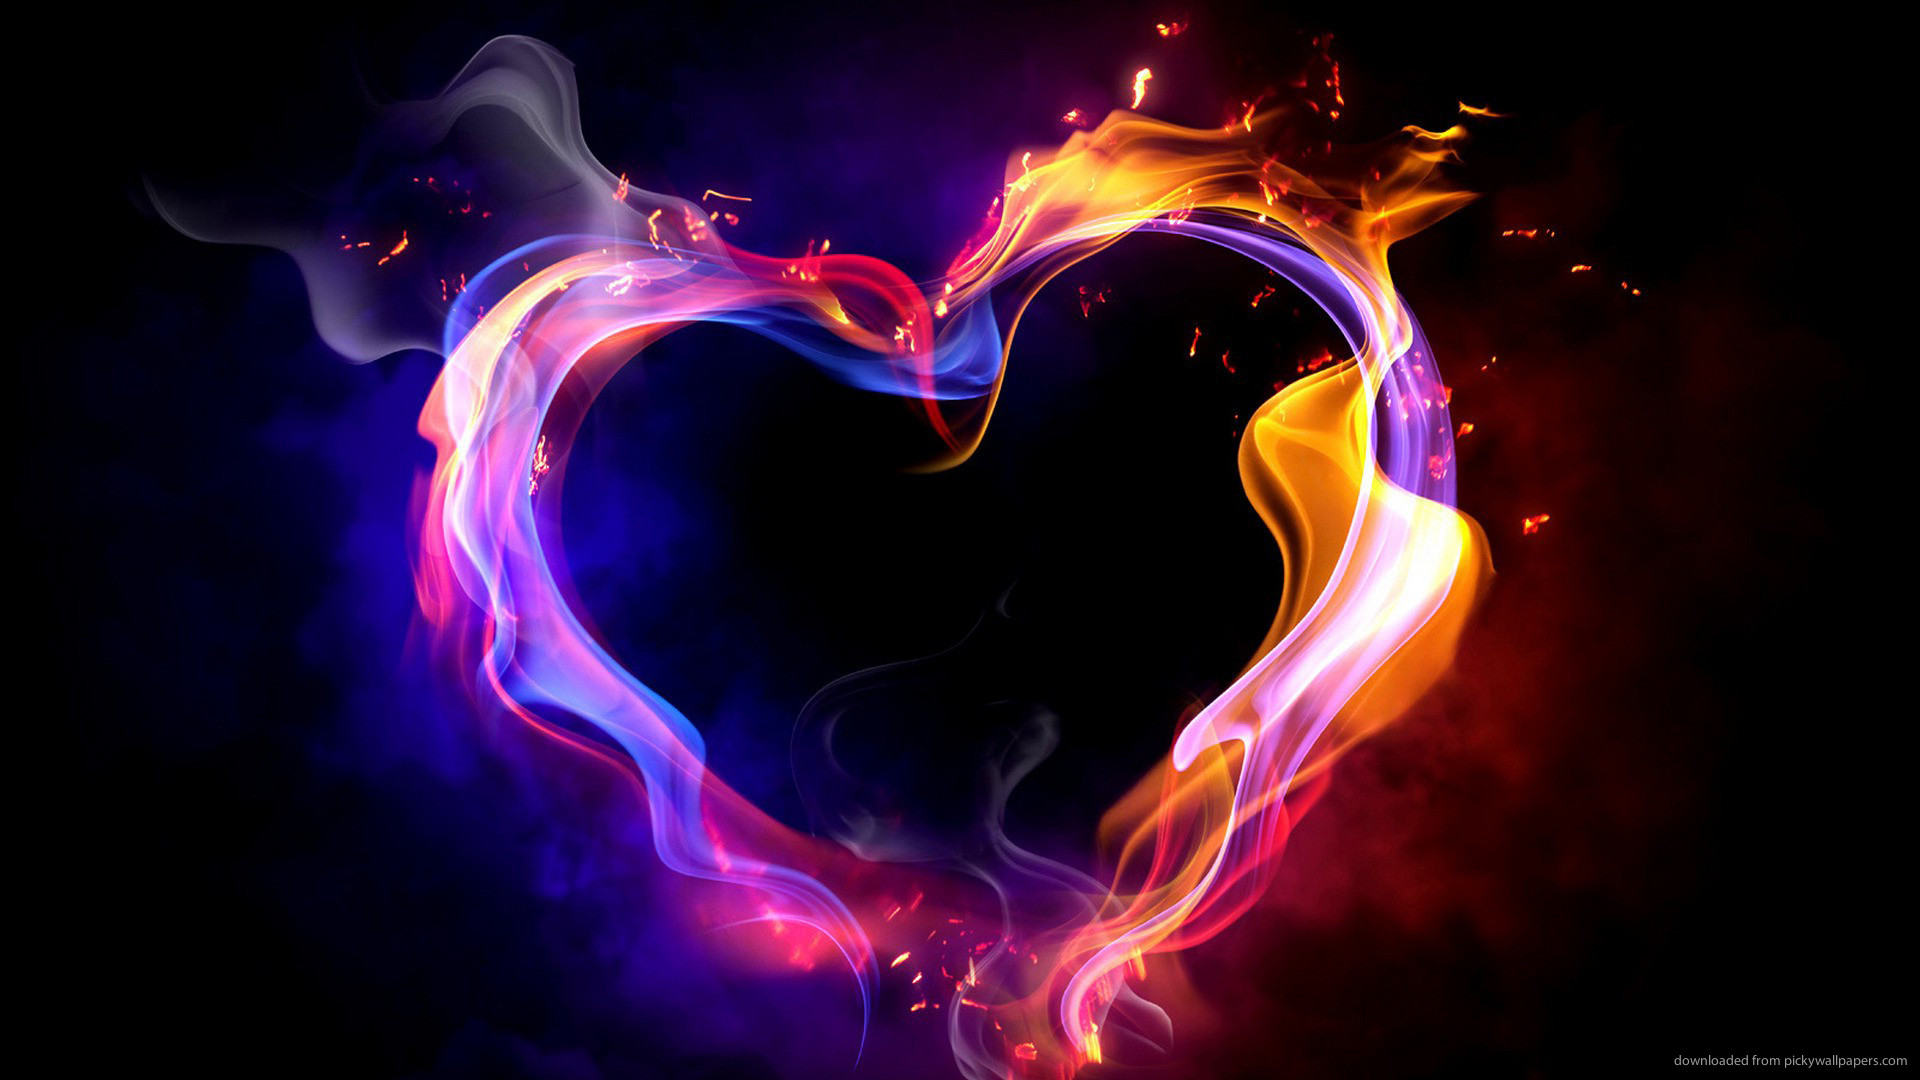 Fire Heart Wallpaper Find best latest Fire Heart Wallpaper in HD for your PC desktop background mobile phones